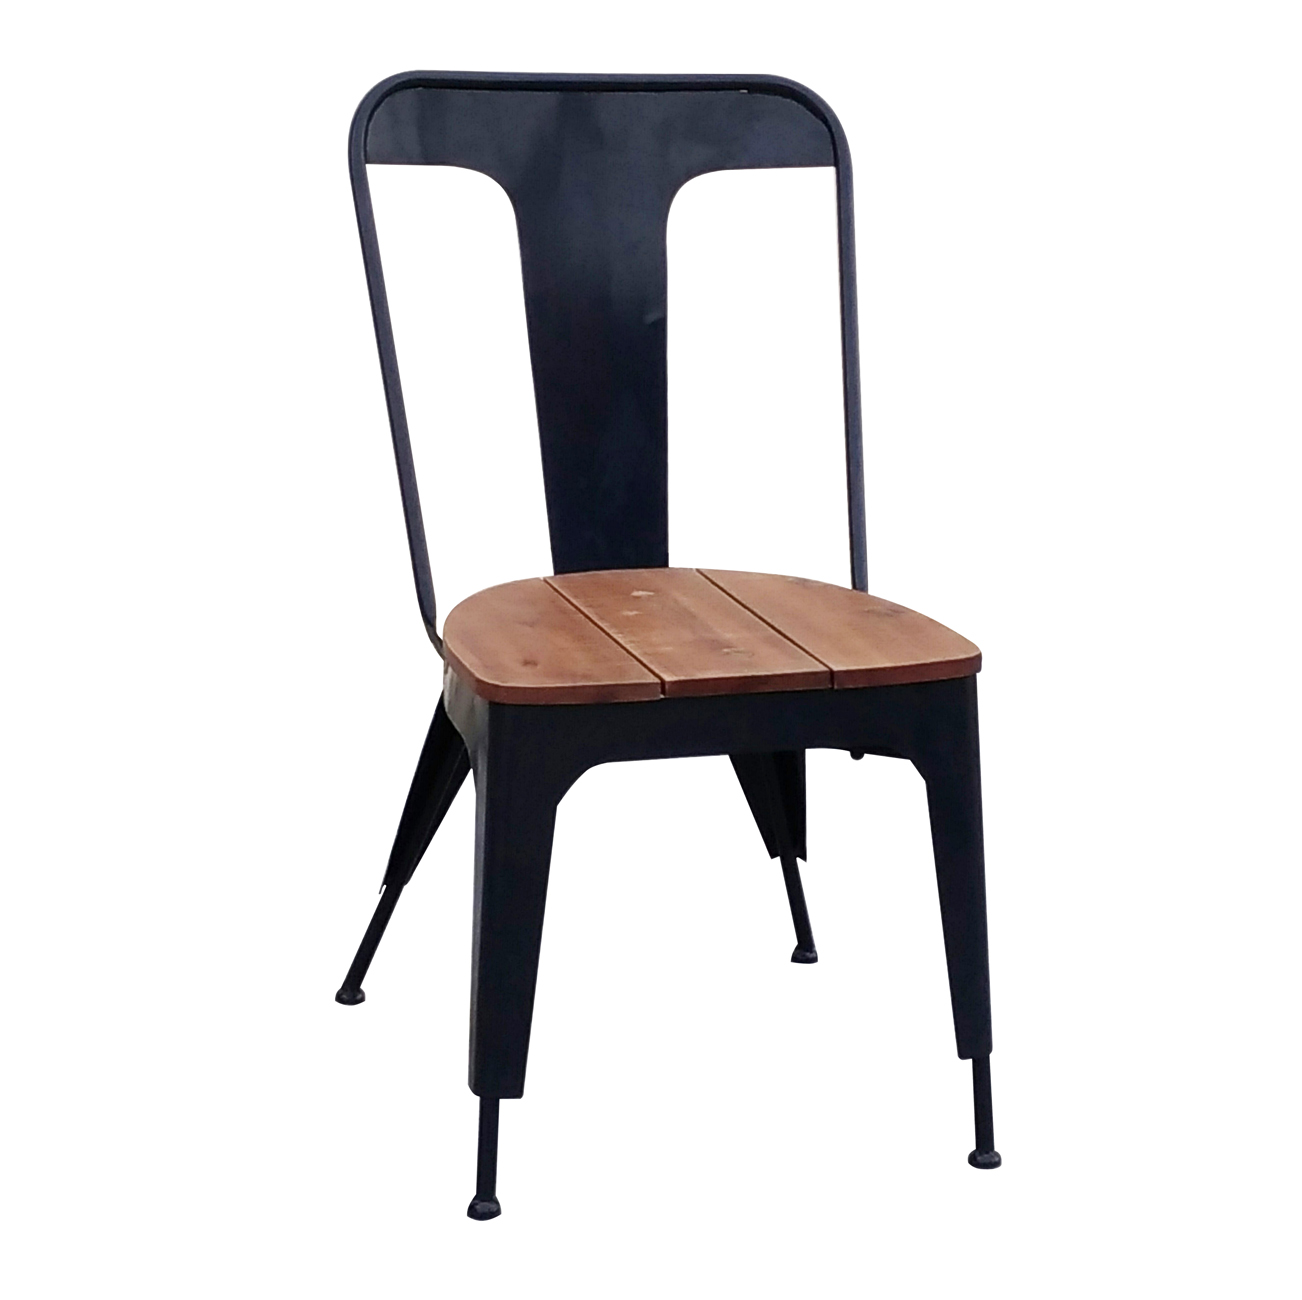 Metv dining chair